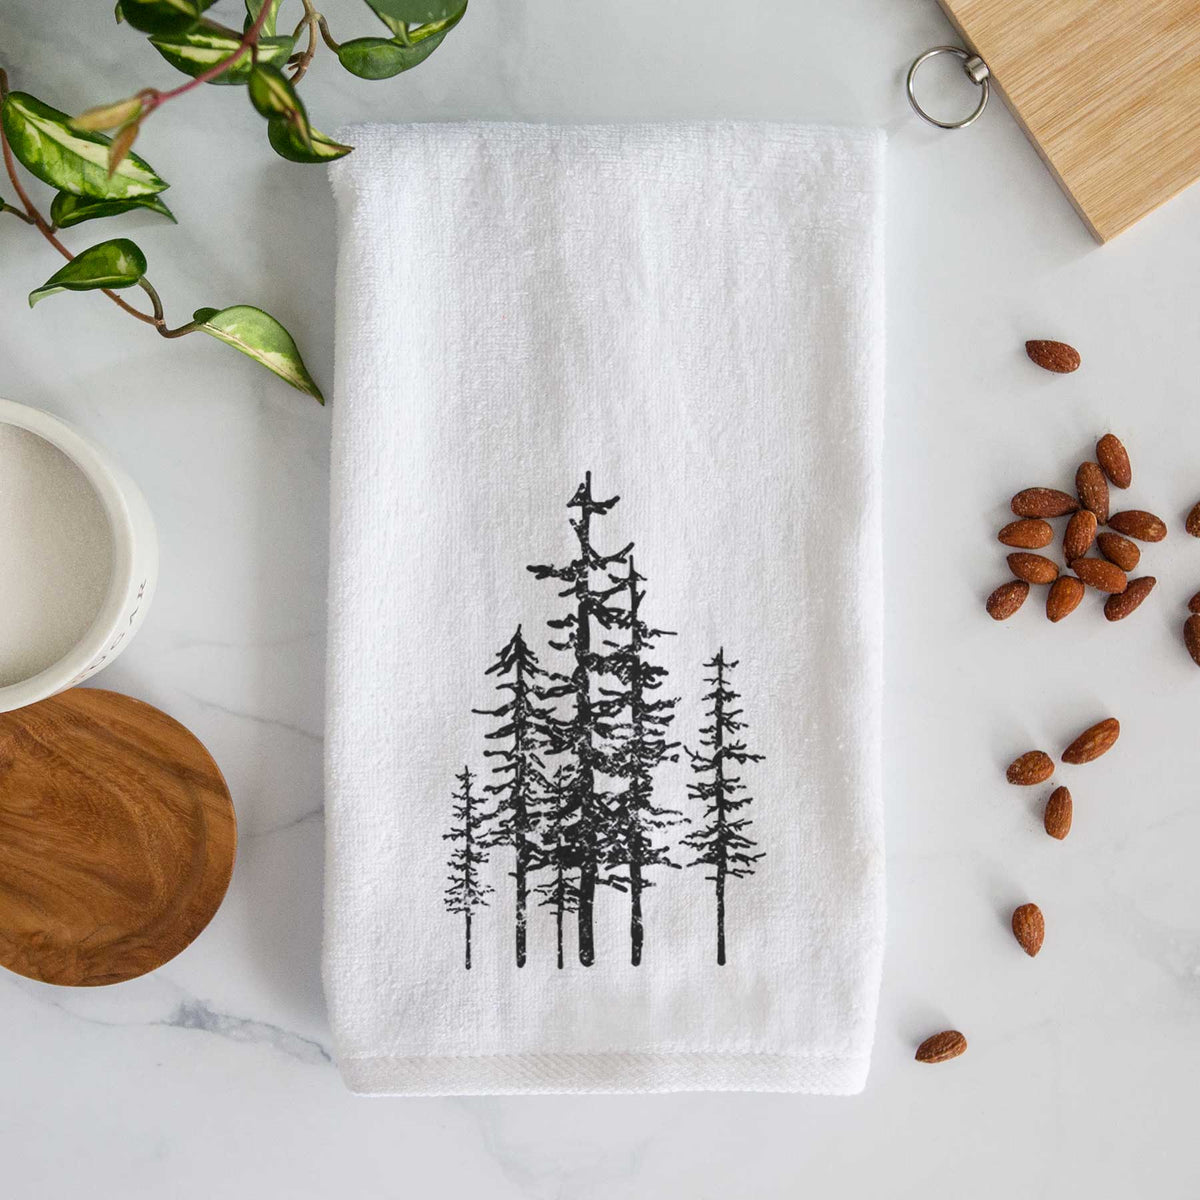 Evergreen Trees Hand Towel